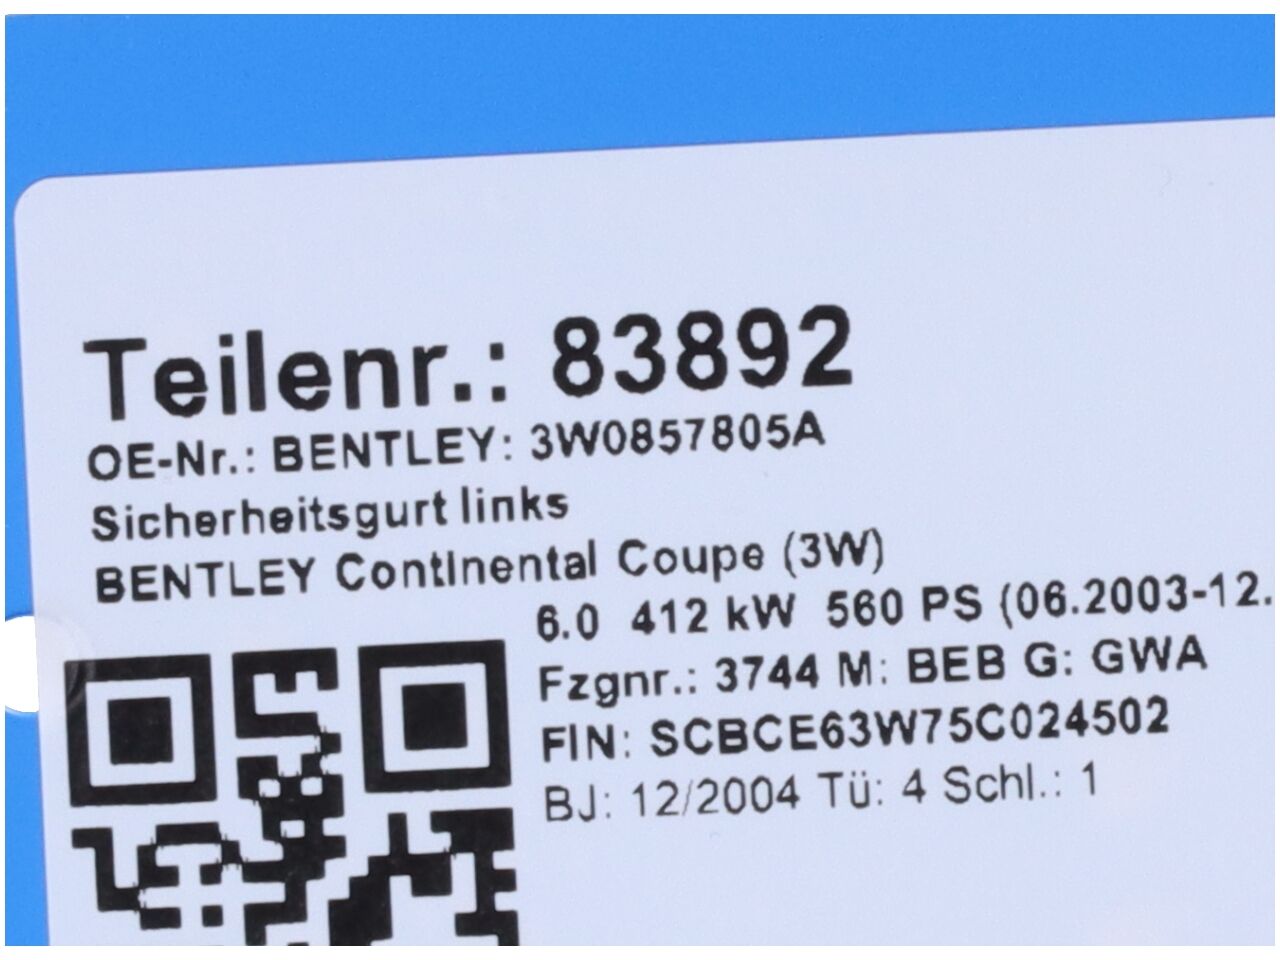 Sicherheitsgurt links BENTLEY Continental Coupe (3W) 6.0  412 kW  560 PS (06.2003-12.2011)